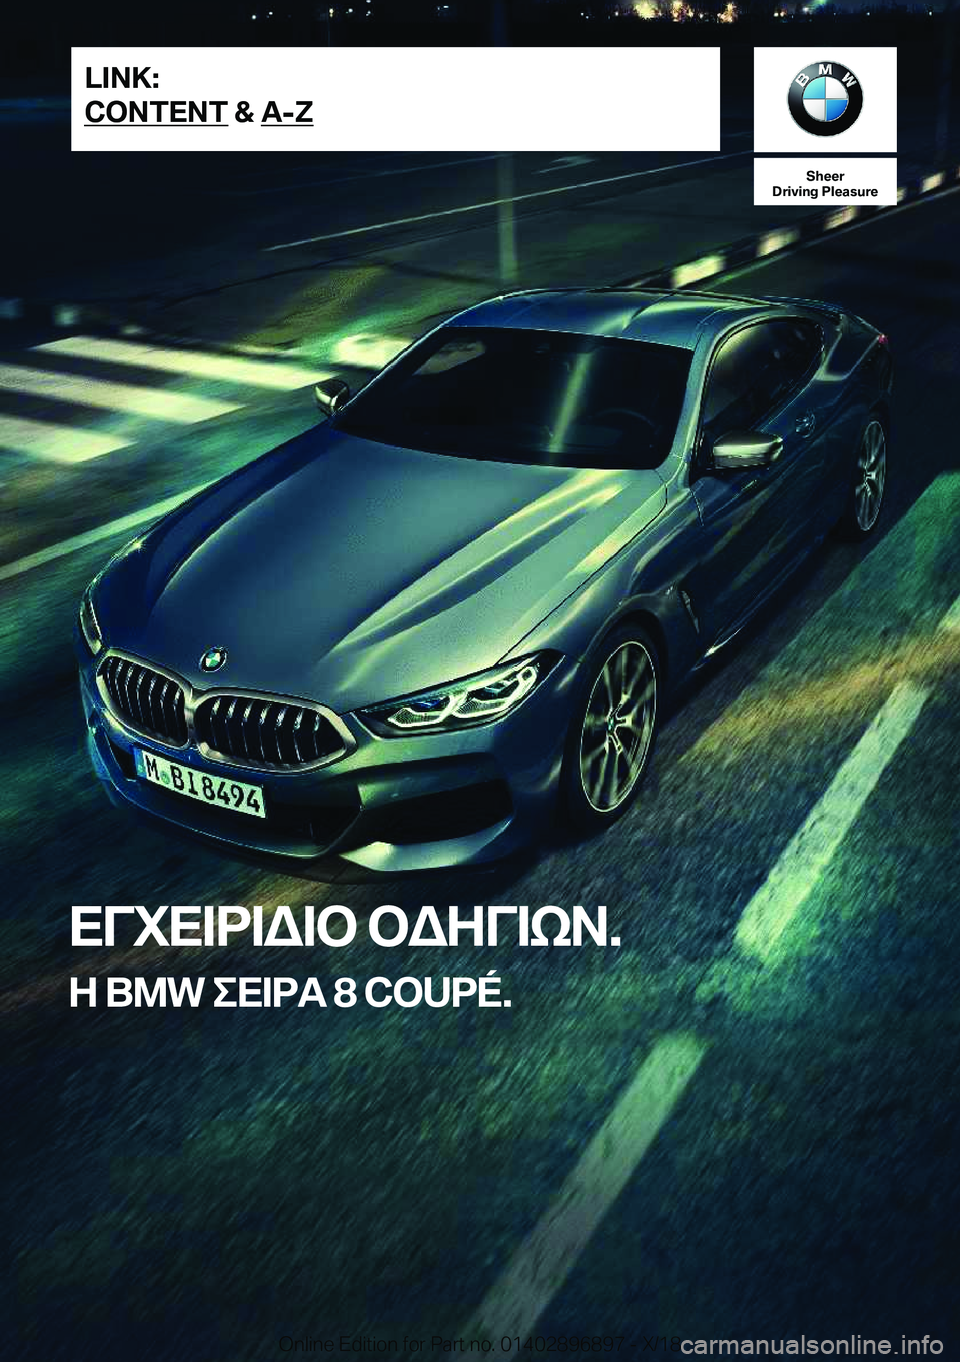 BMW 8 SERIES COUPE 2019  ΟΔΗΓΌΣ ΧΡΉΣΗΣ (in Greek) �S�h�e�e�r
�D�r�i�v�i�n�g��P�l�e�a�s�u�r�e
XViX=d=W=b�bWZV=kA�.
Z��B�M�W�eX=dT��8��C�O�U�P�